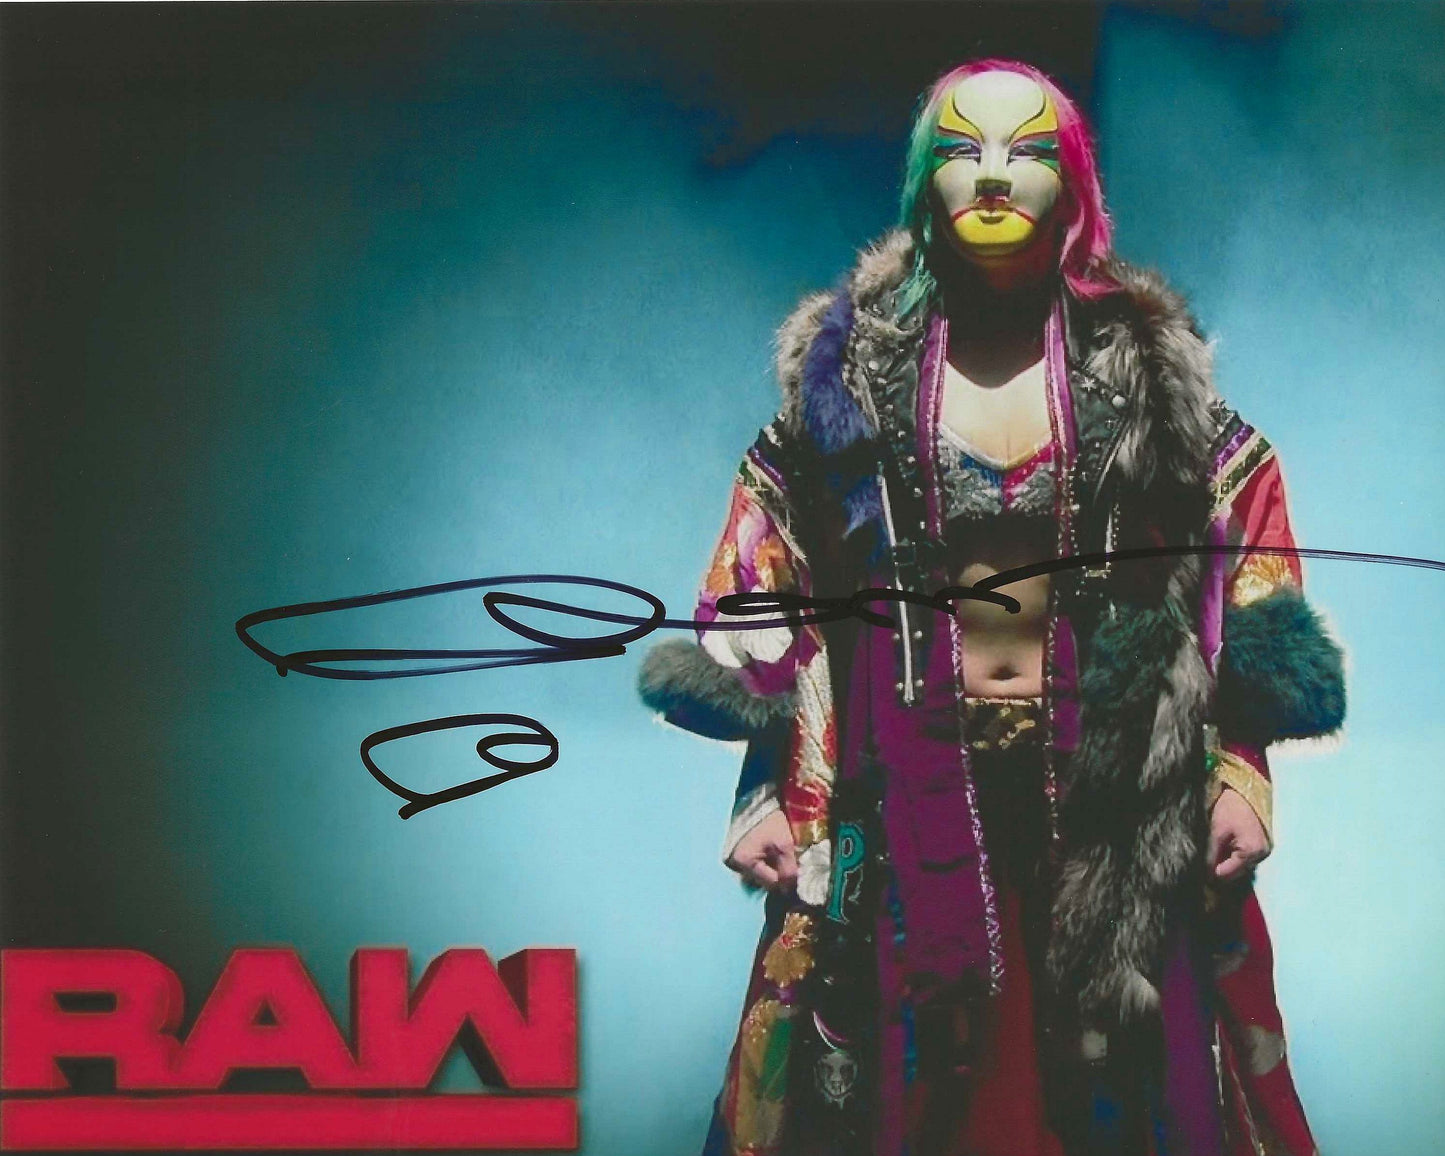 Asuka Autographed Signed "WWE" 8X10 Photo Elite Promotions & Graphz Authentication